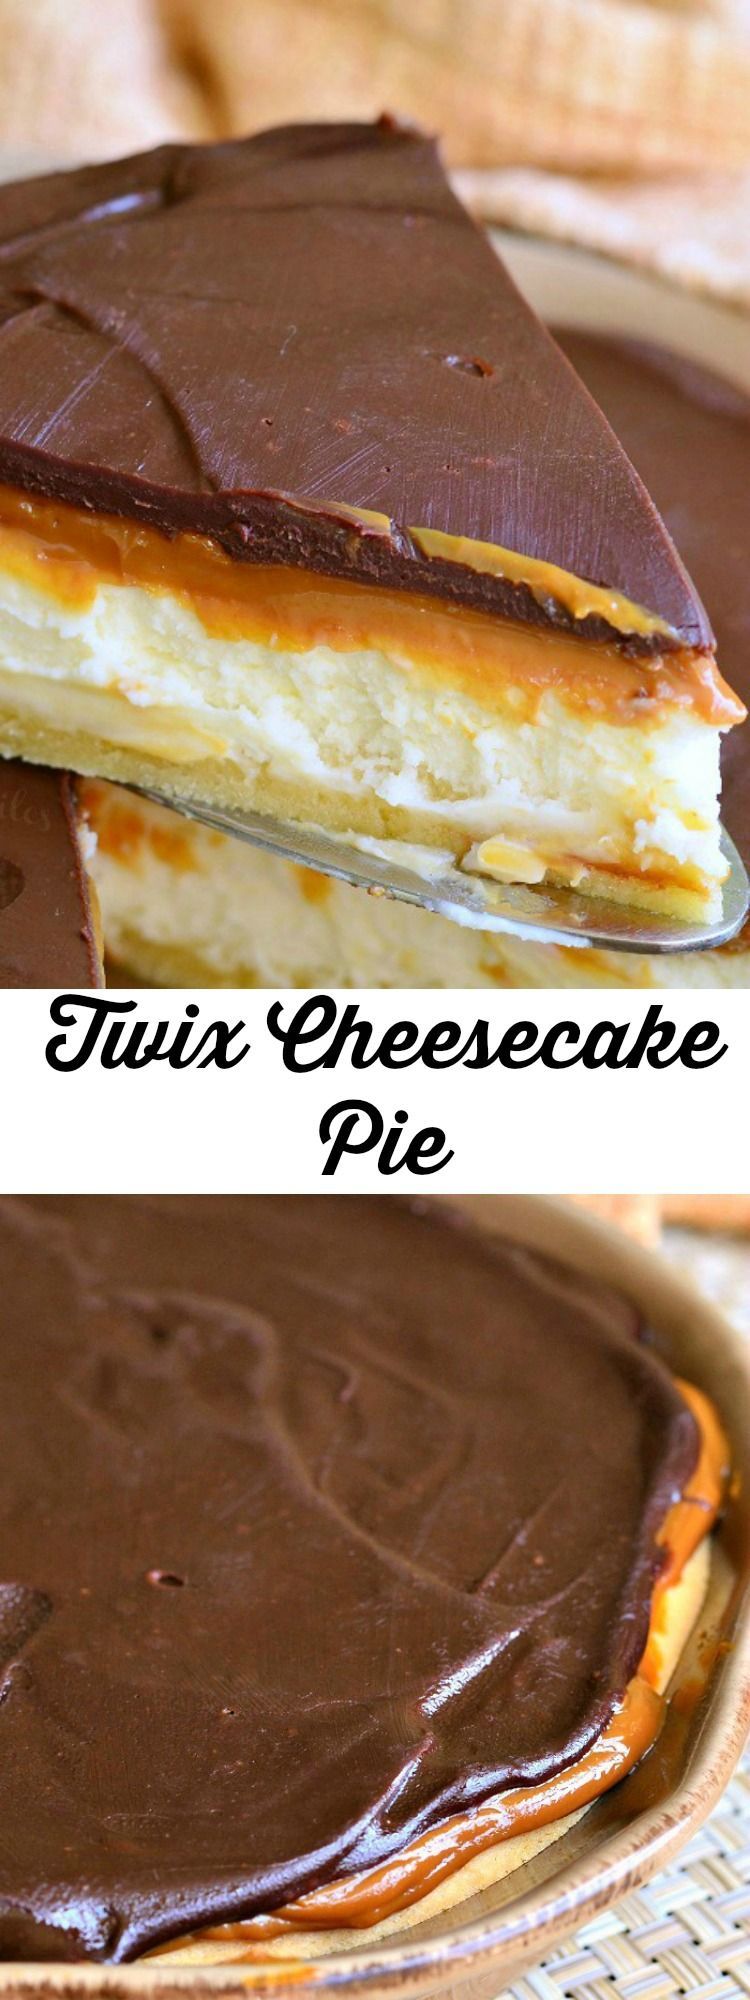 Twix Cheesecake Pie! Heavenly cheesecake pie made to taste like a favorite Twix candy bar.